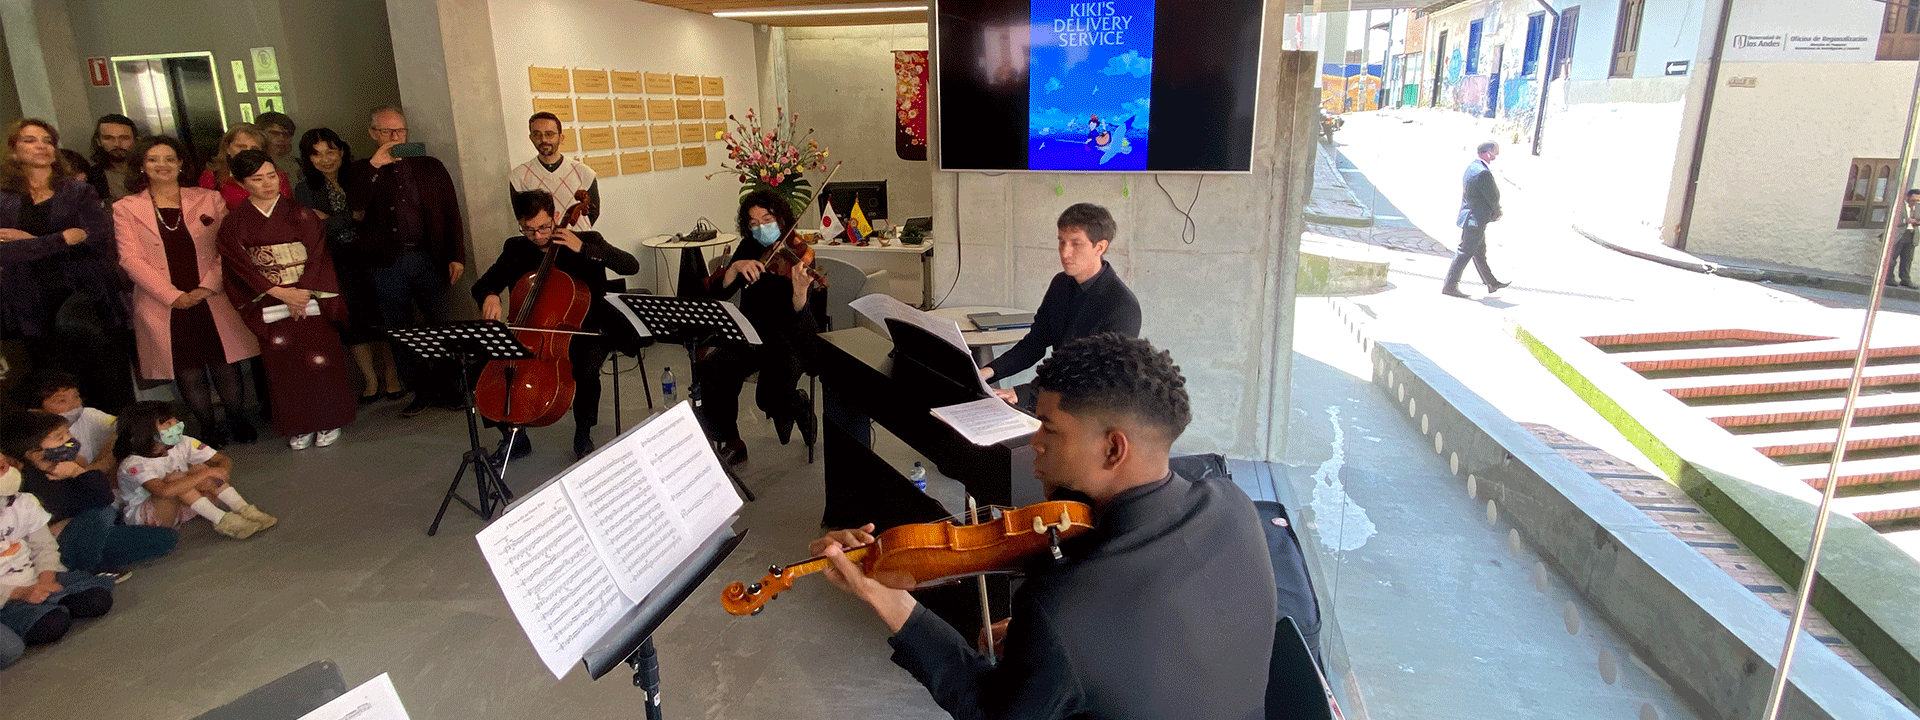 Grupo musical uniandino interpretando música de Studio Ghibli.